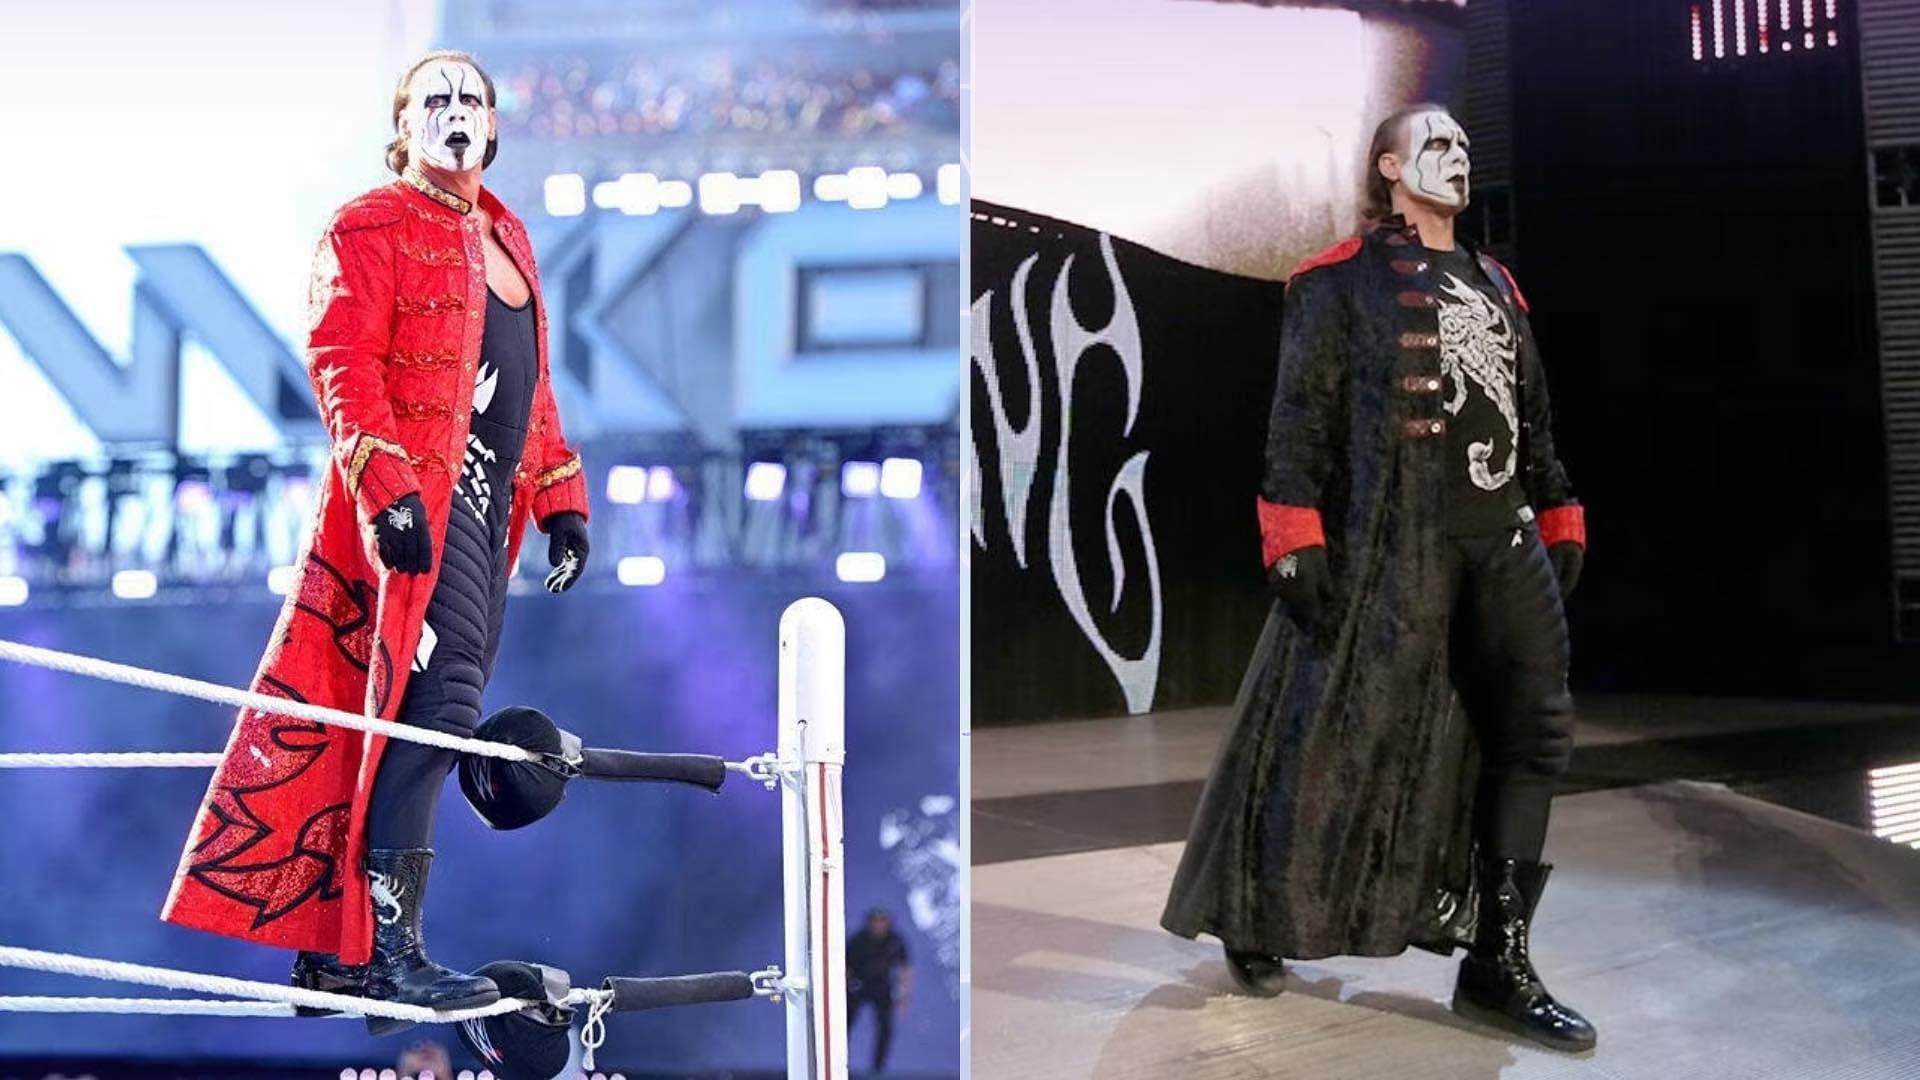 Sting will wrestle his last match tonight